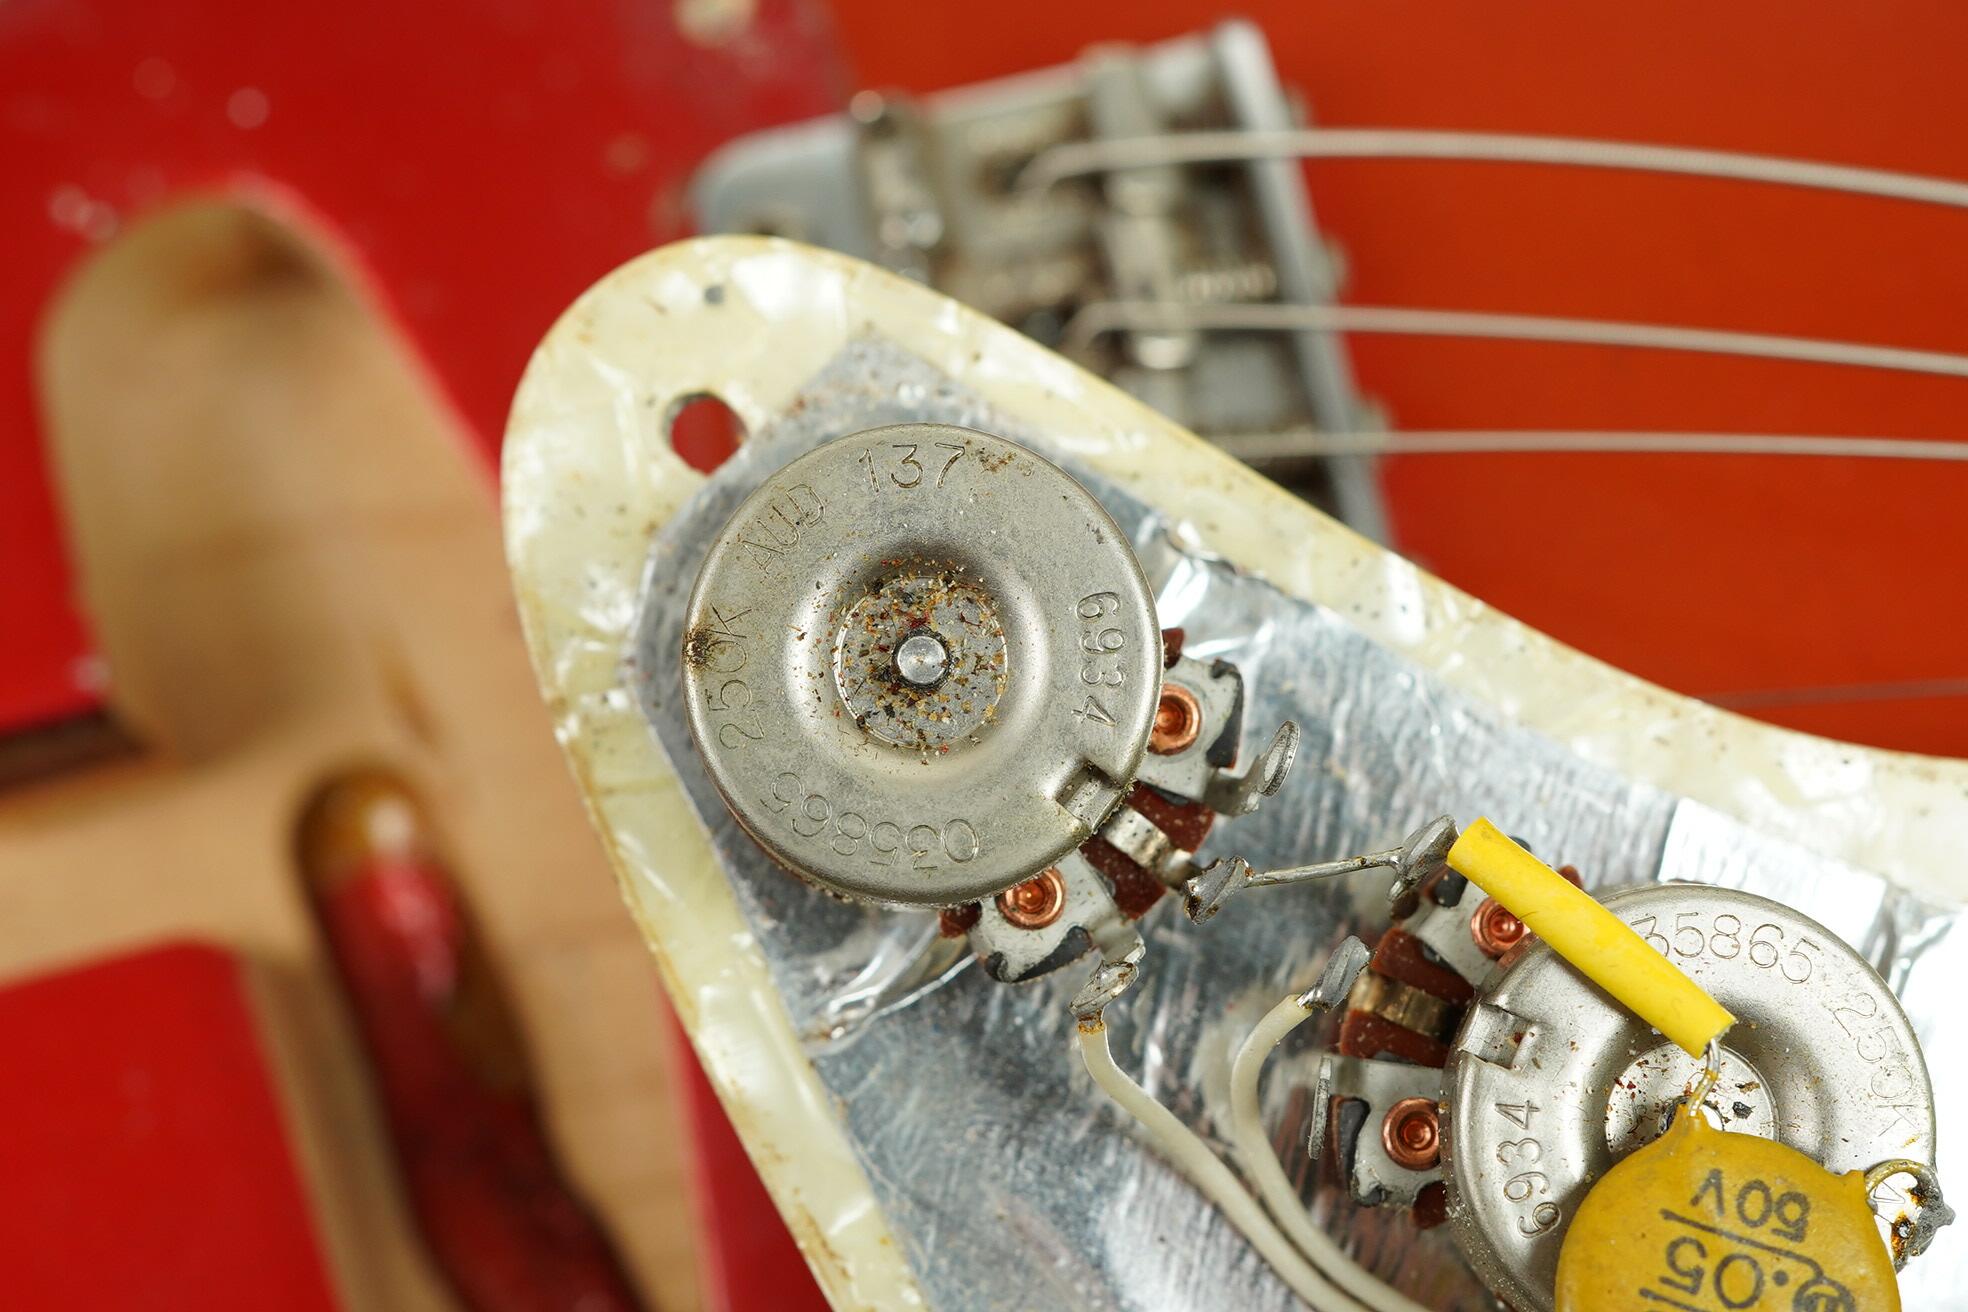 1969 Fender Stratocaster Candy Apple Red Left Handed